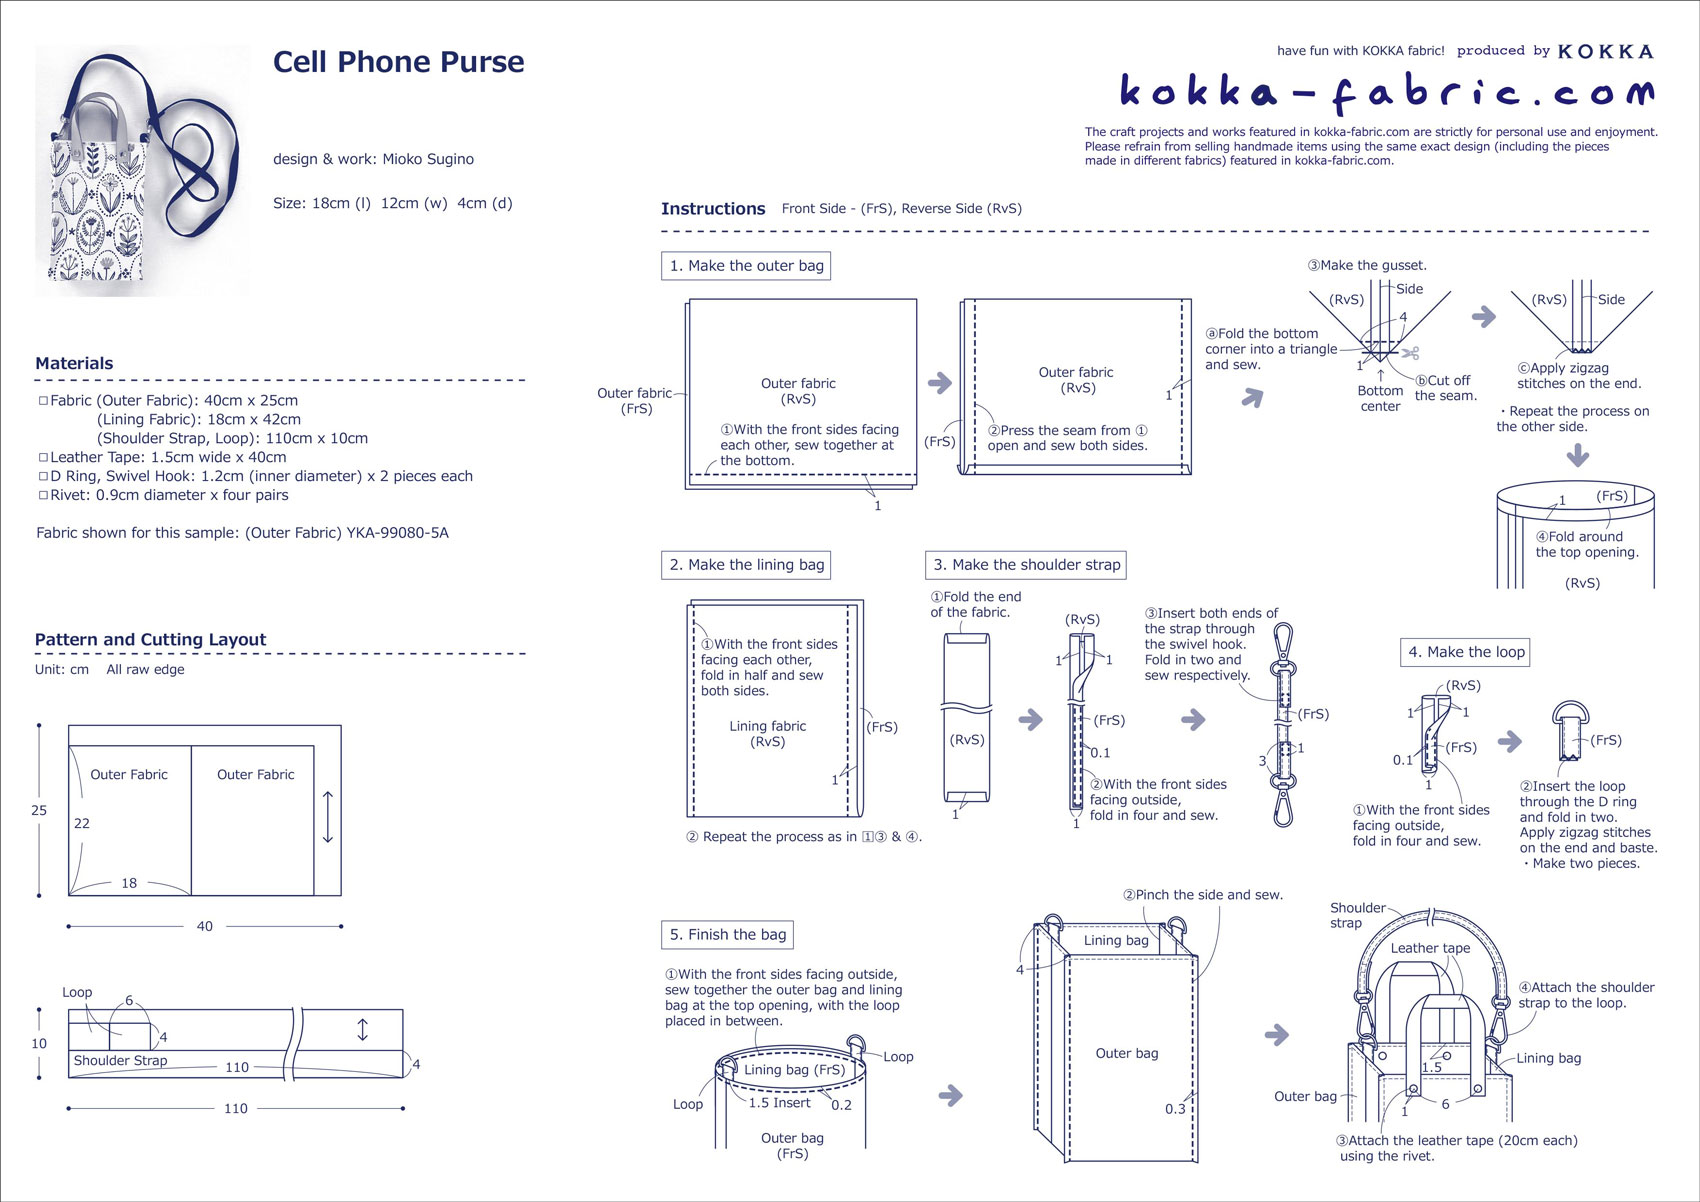 Cell Phone Purse – Free Sewing Tutorial | KOKKA-FABRIC.COM | have fun ...